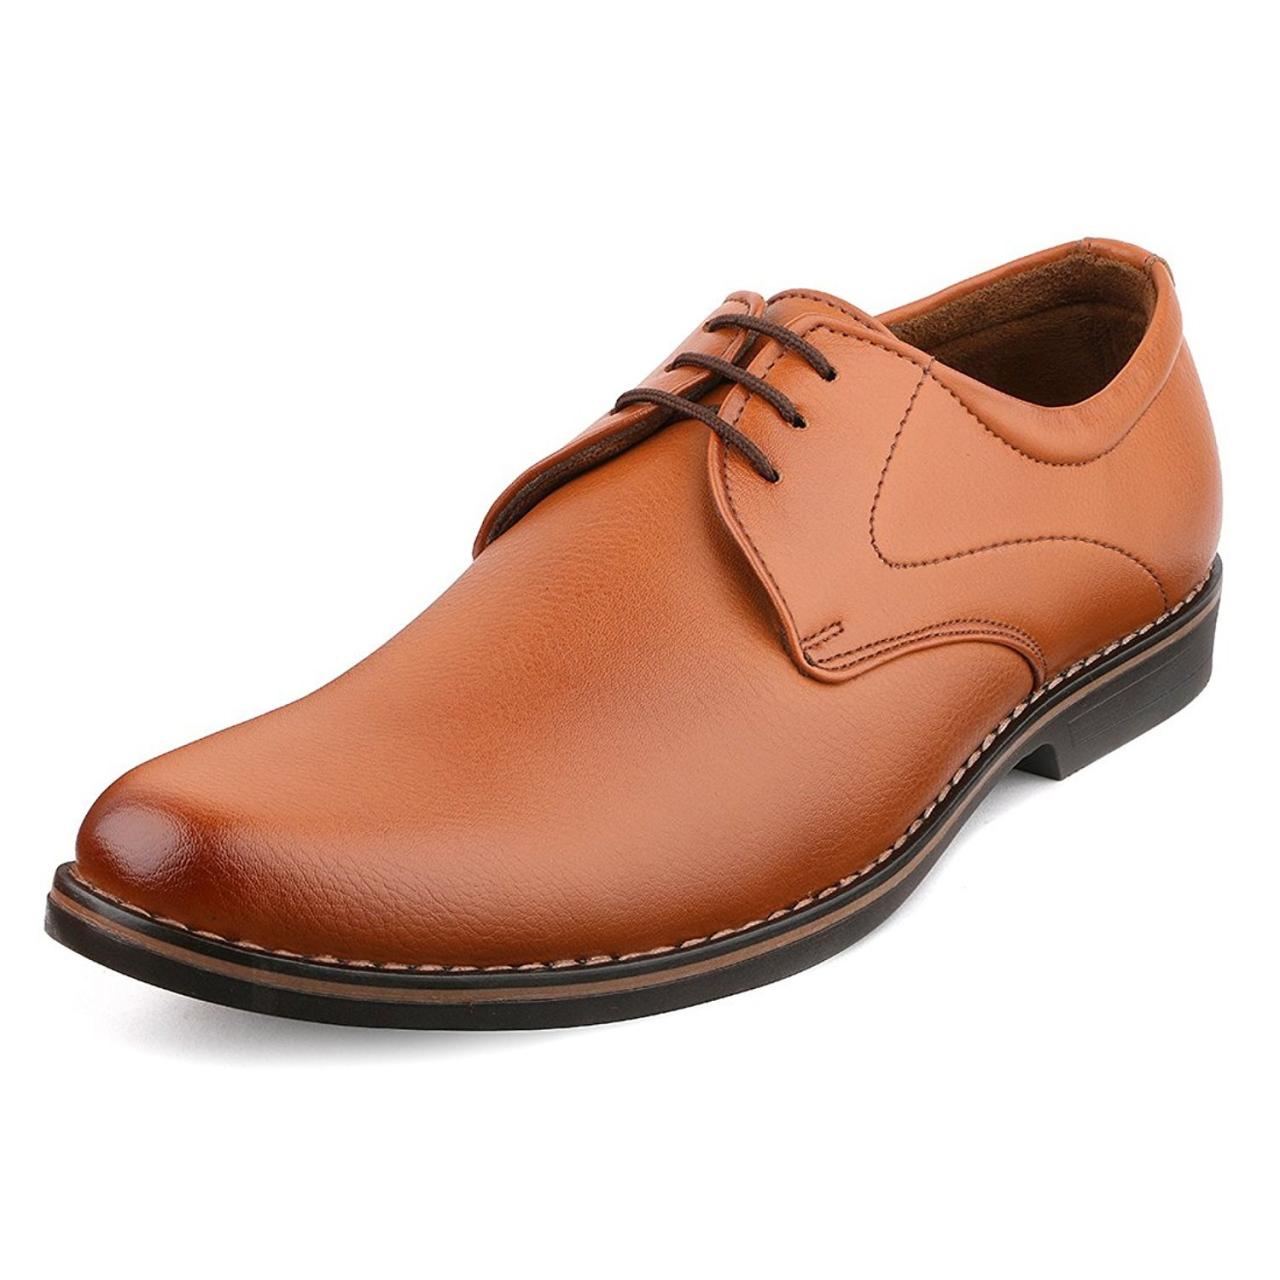 tan business shoes